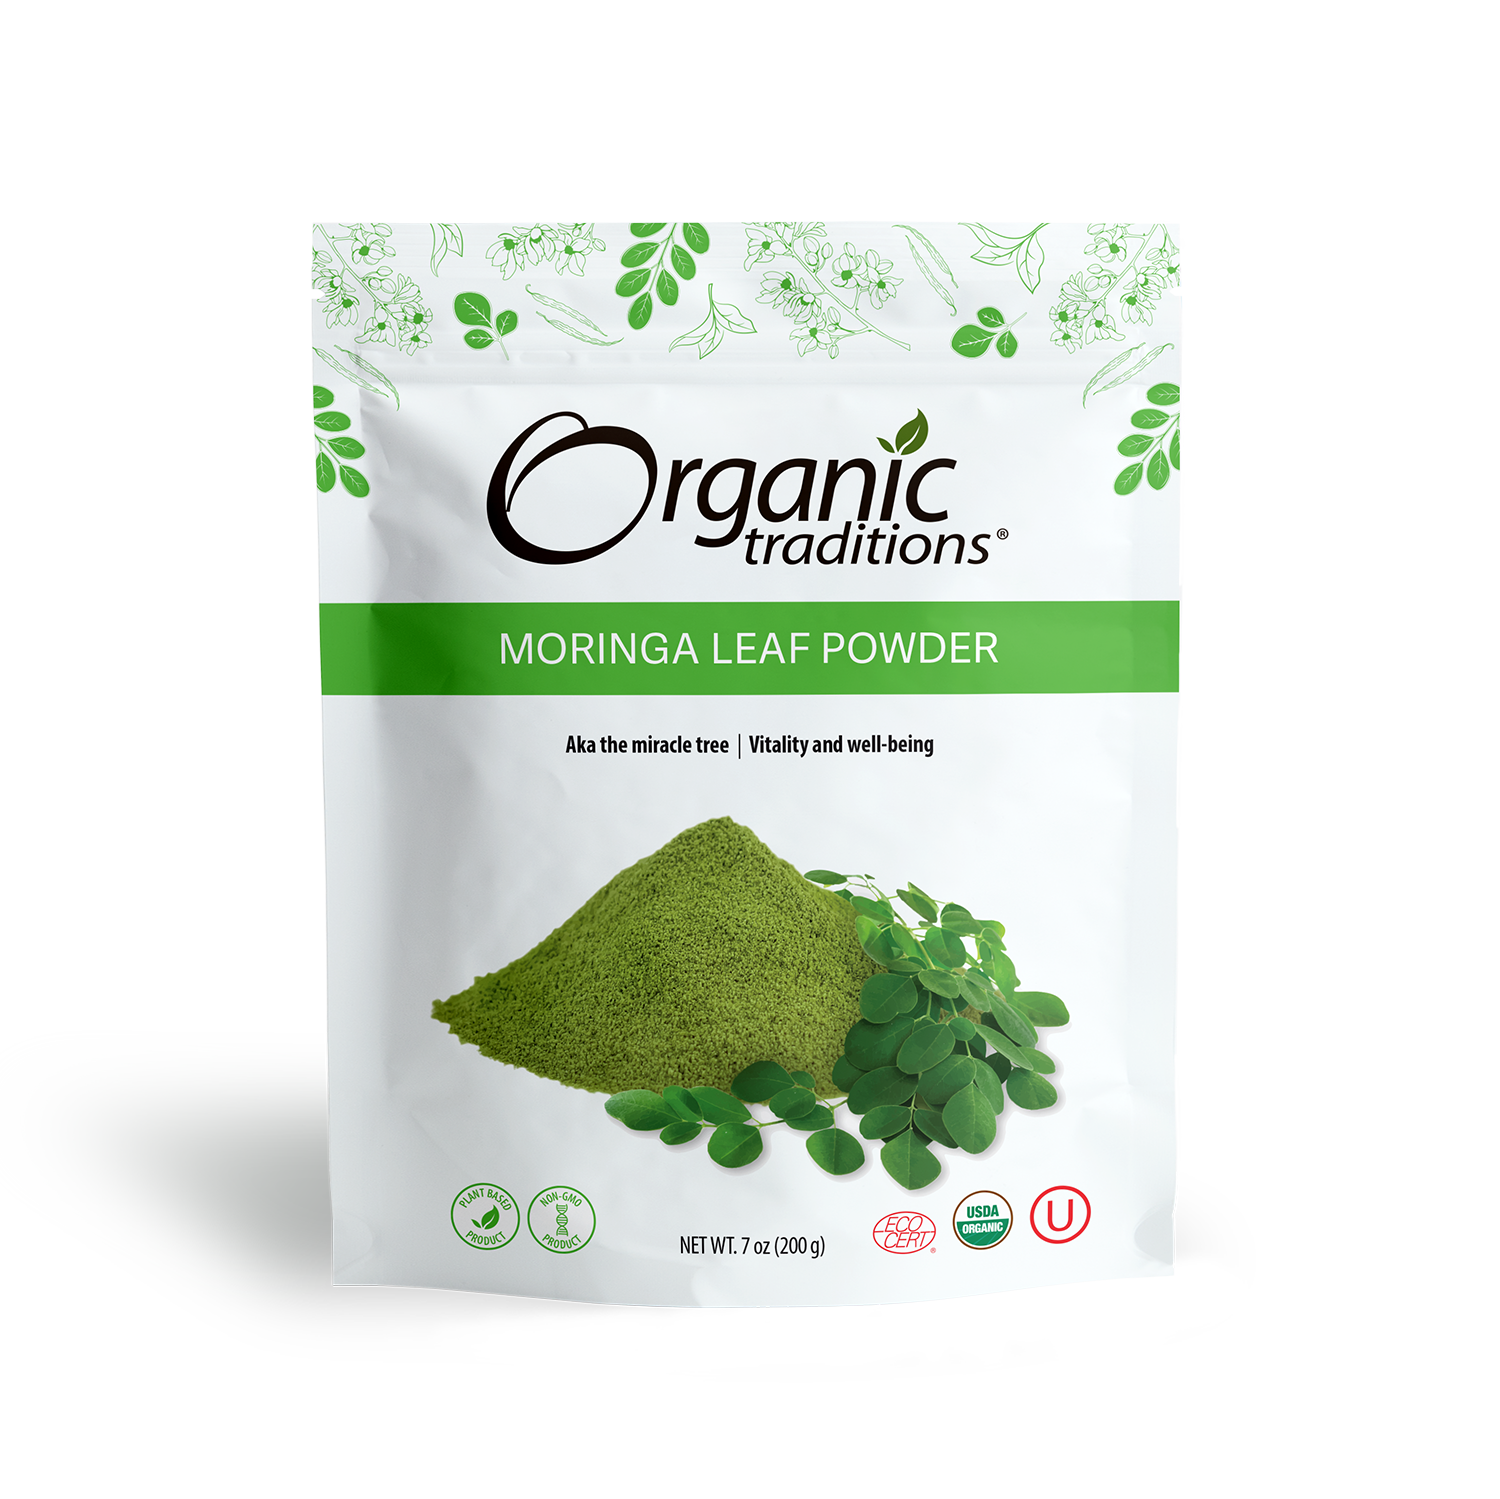 organic traditions moringa leaf powder front of bag image